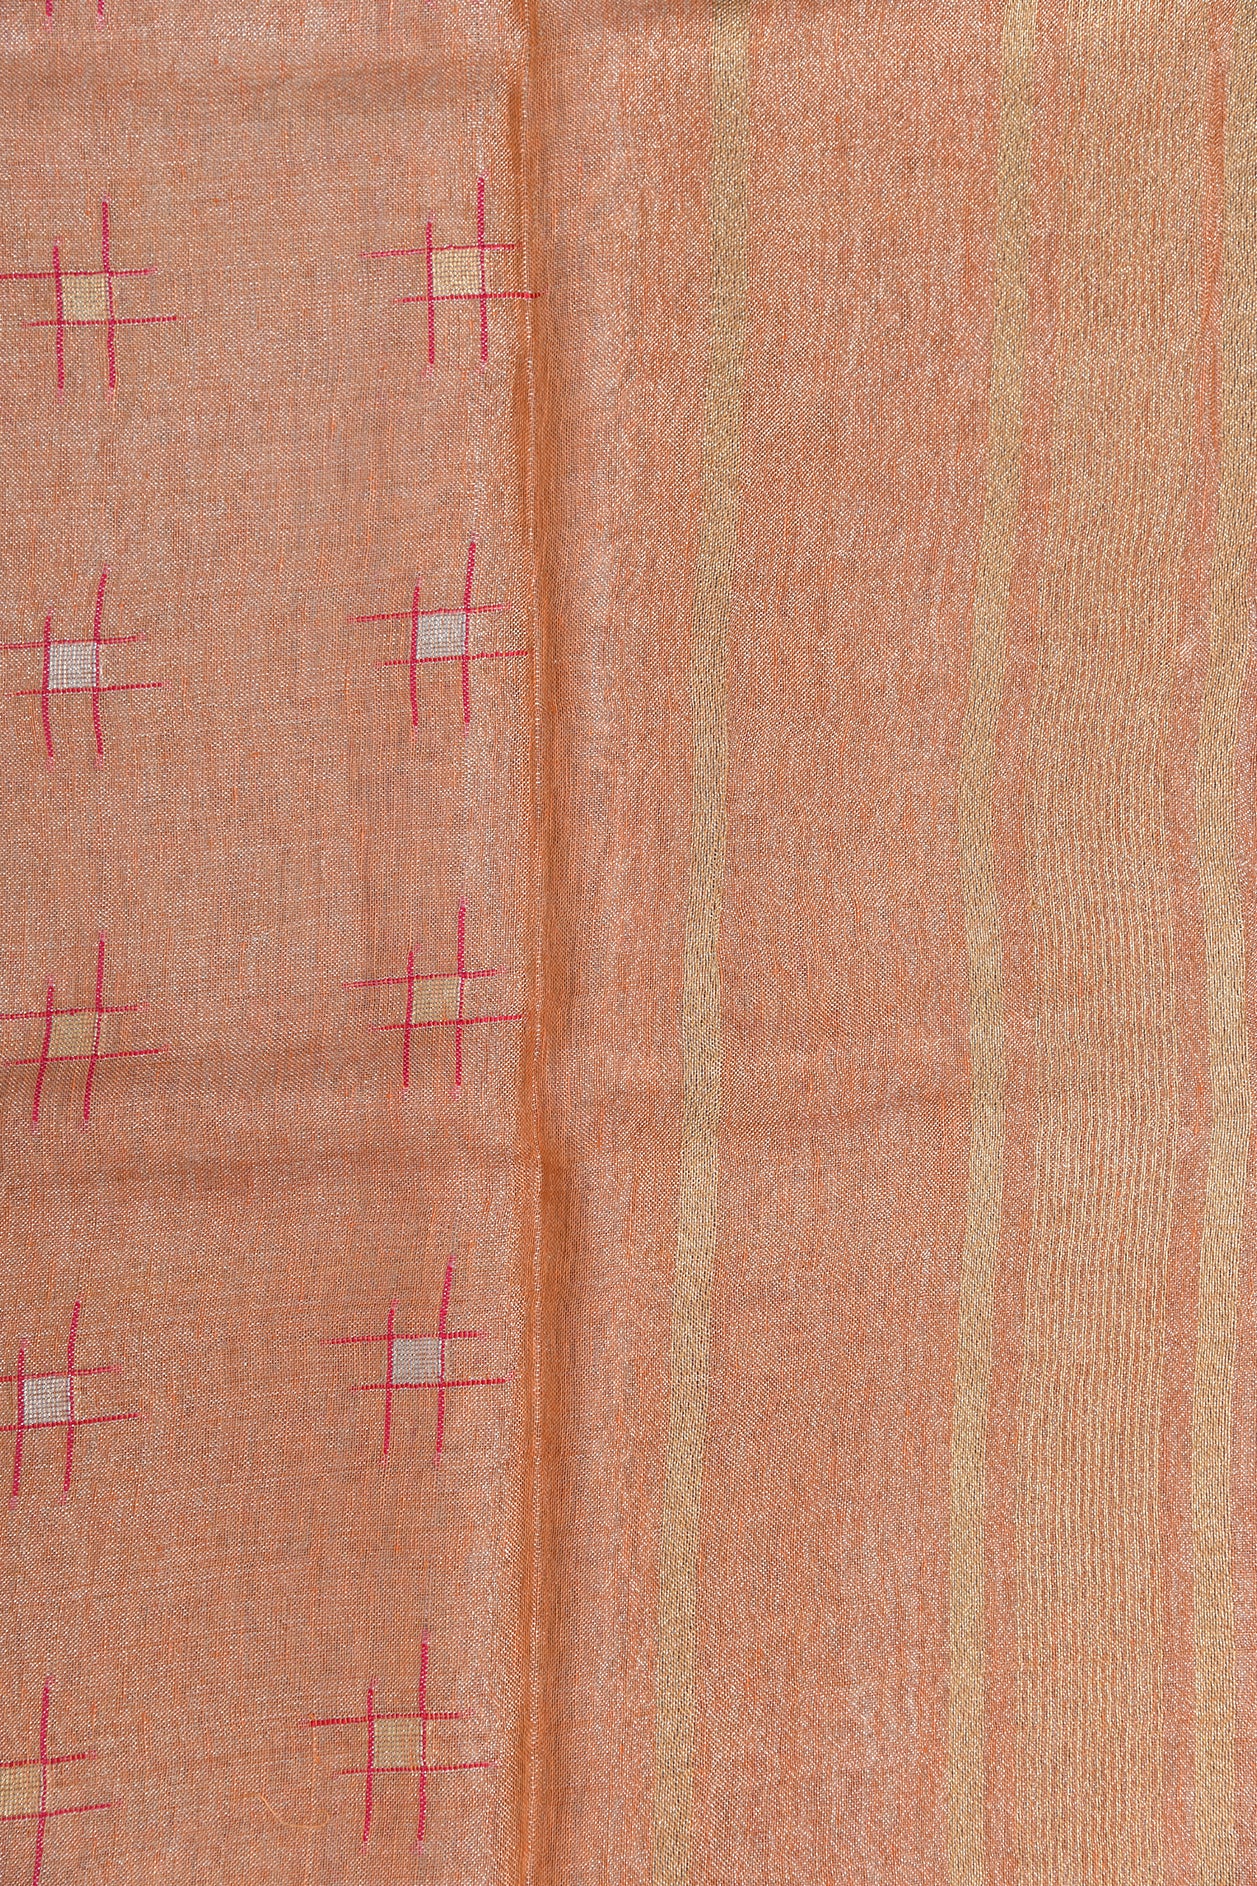 Thread Work, Gold And Silver Zari Buttis Peach Linen Cotton Saree